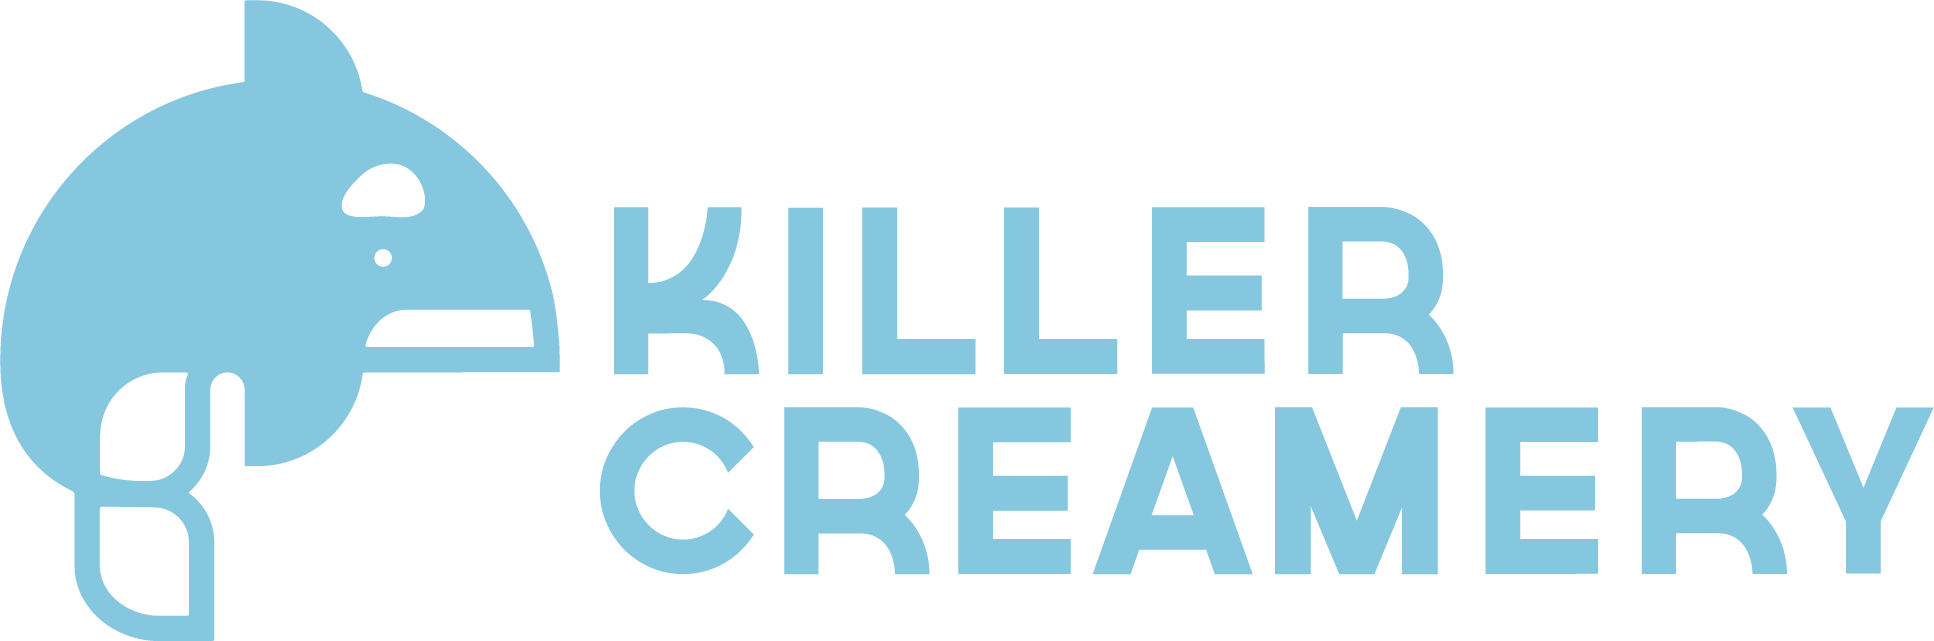 killercreamery Logo